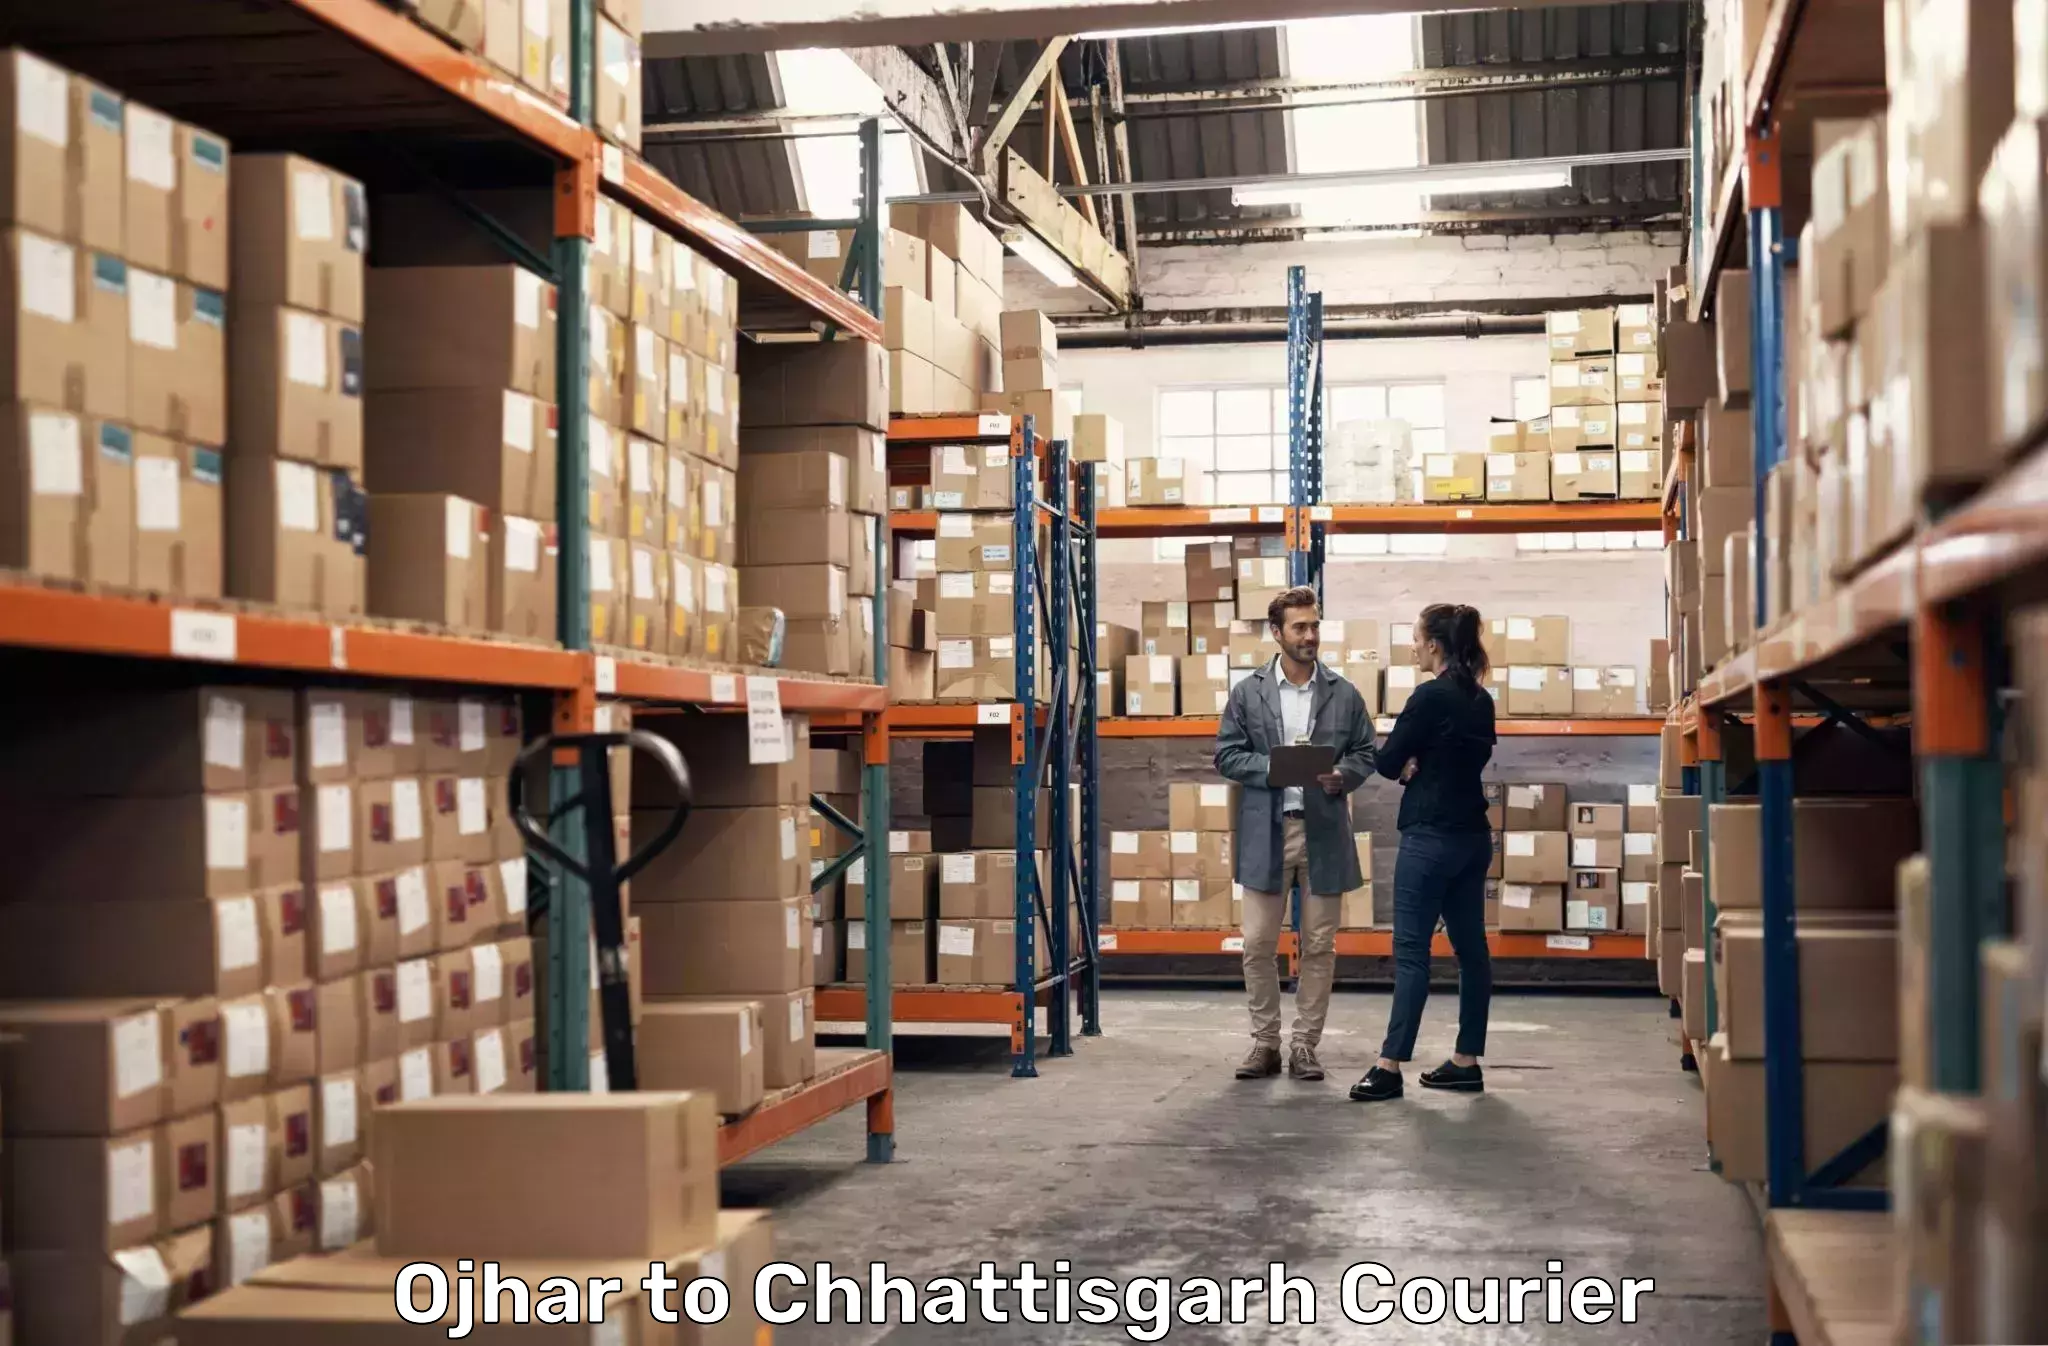 State-of-the-art courier technology Ojhar to Chhattisgarh